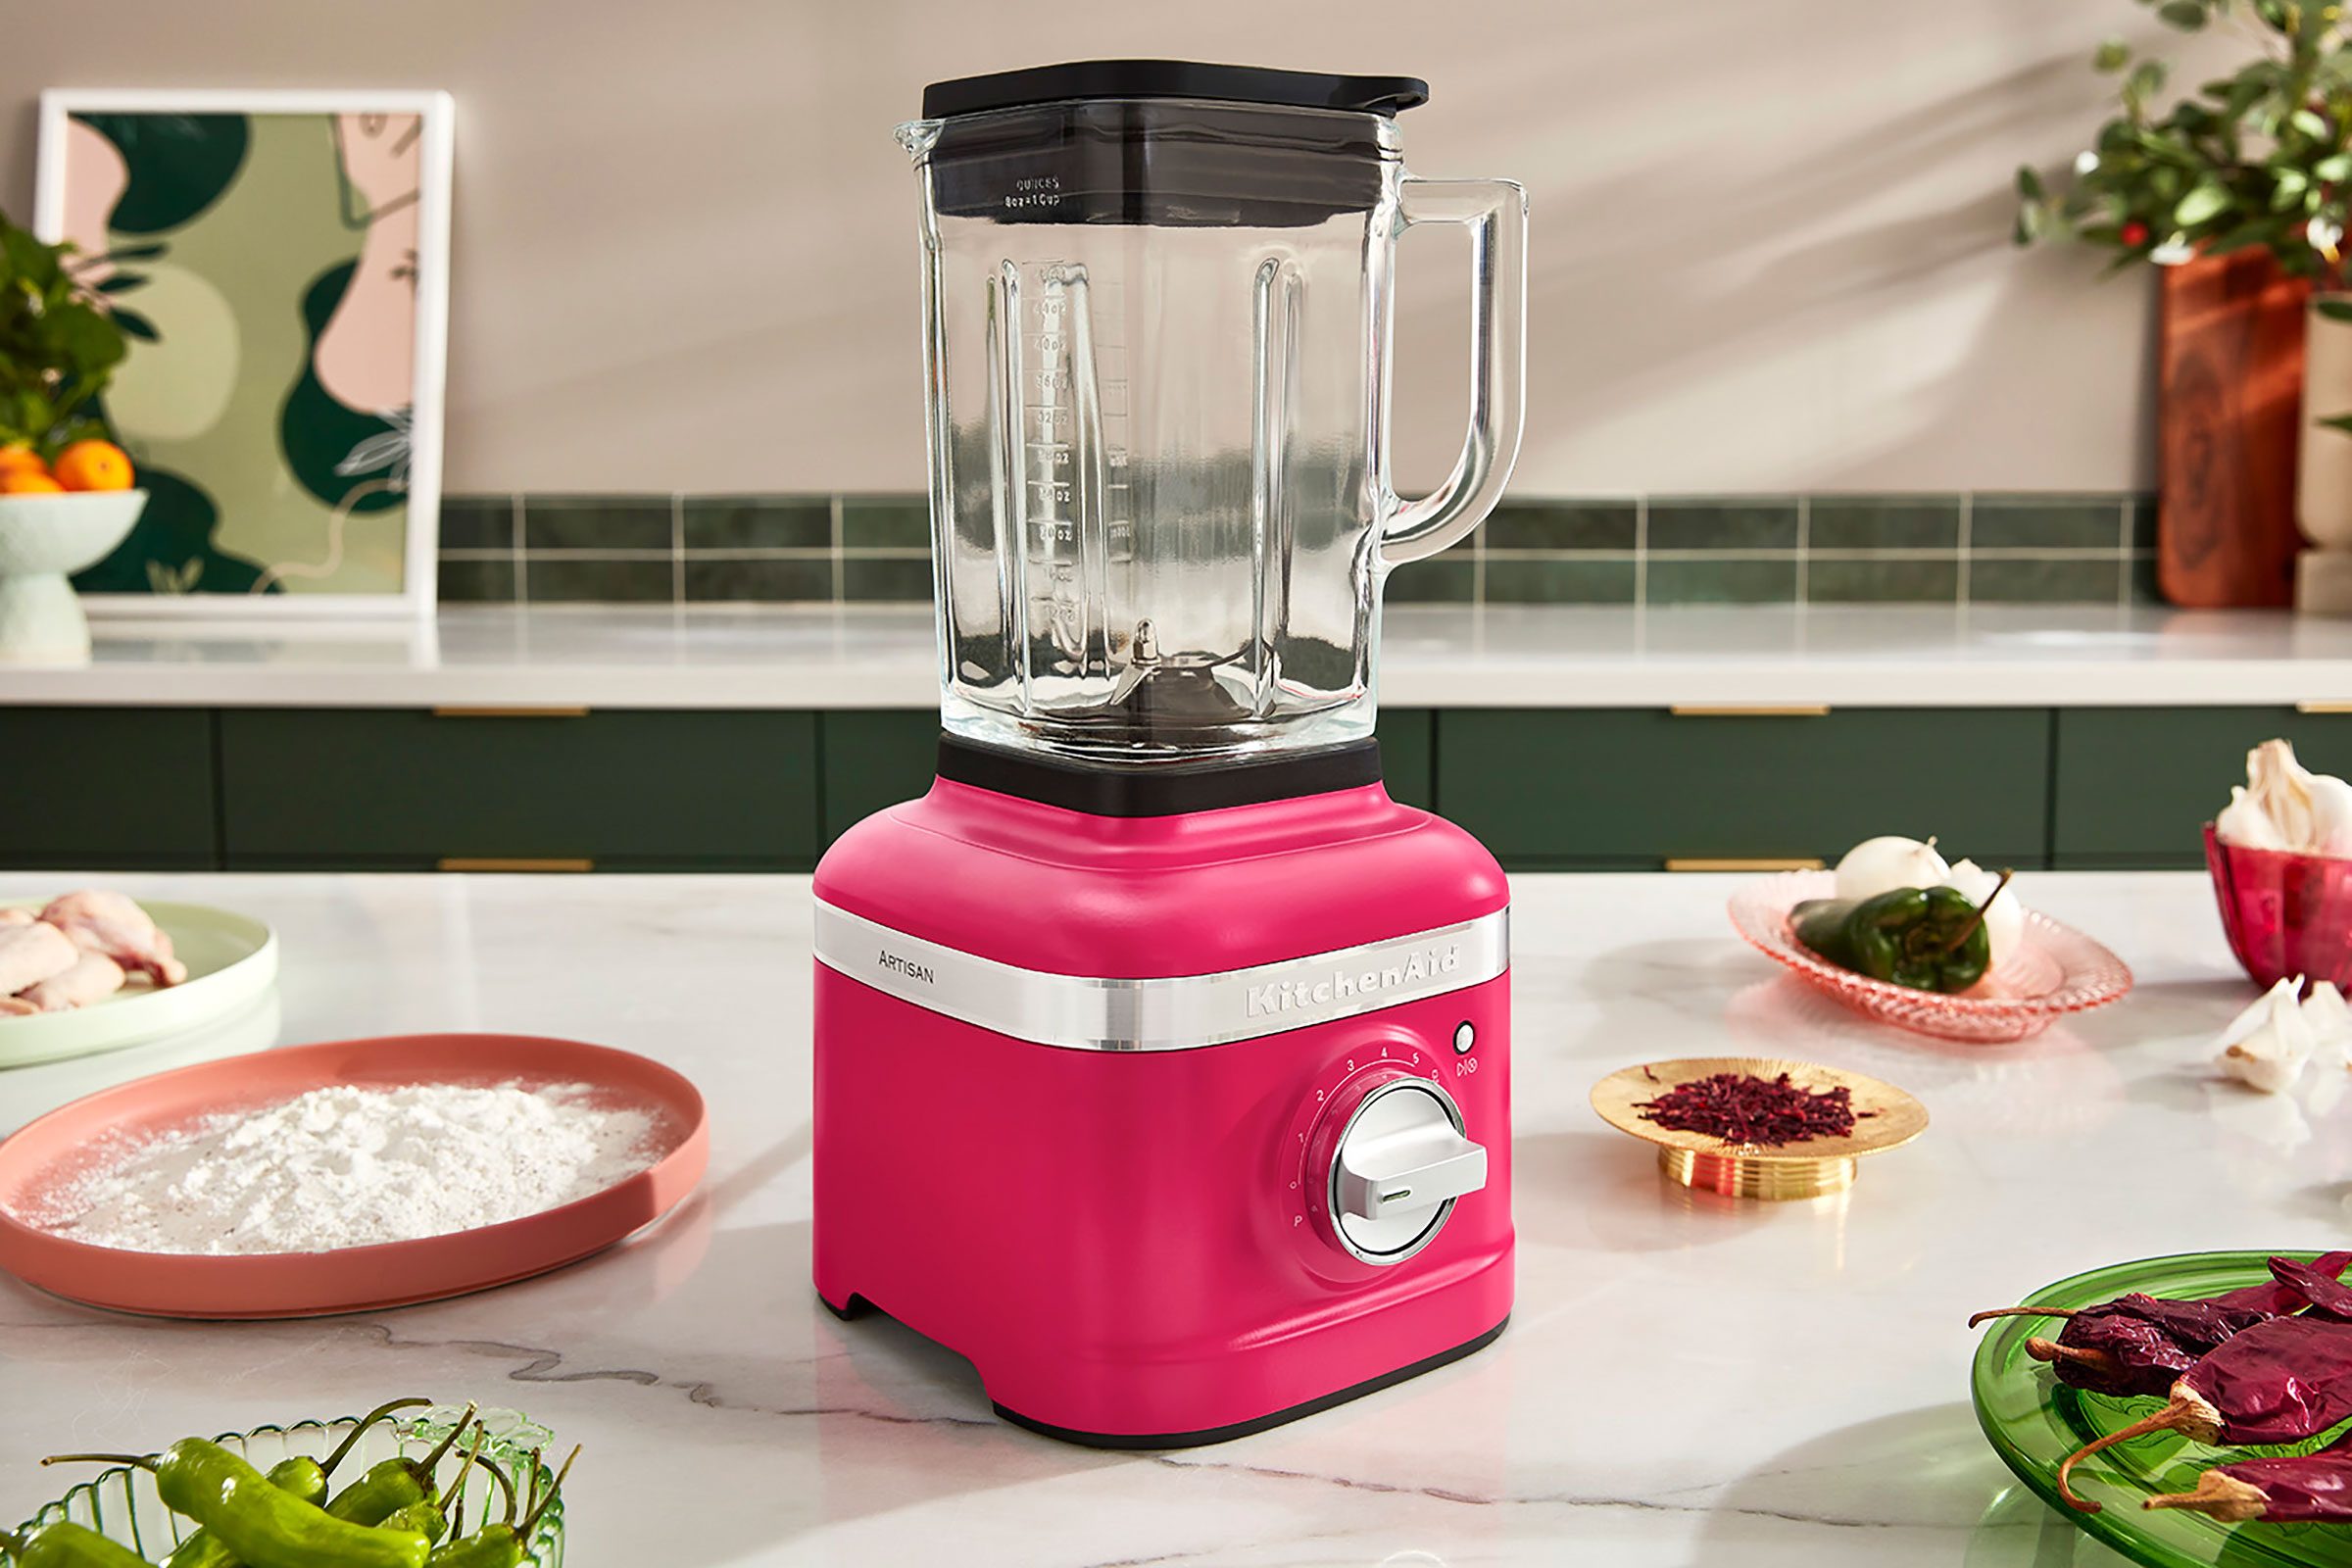 KitchenAid Mixer Colors - Pink Mixer Colors Compared - Old Version